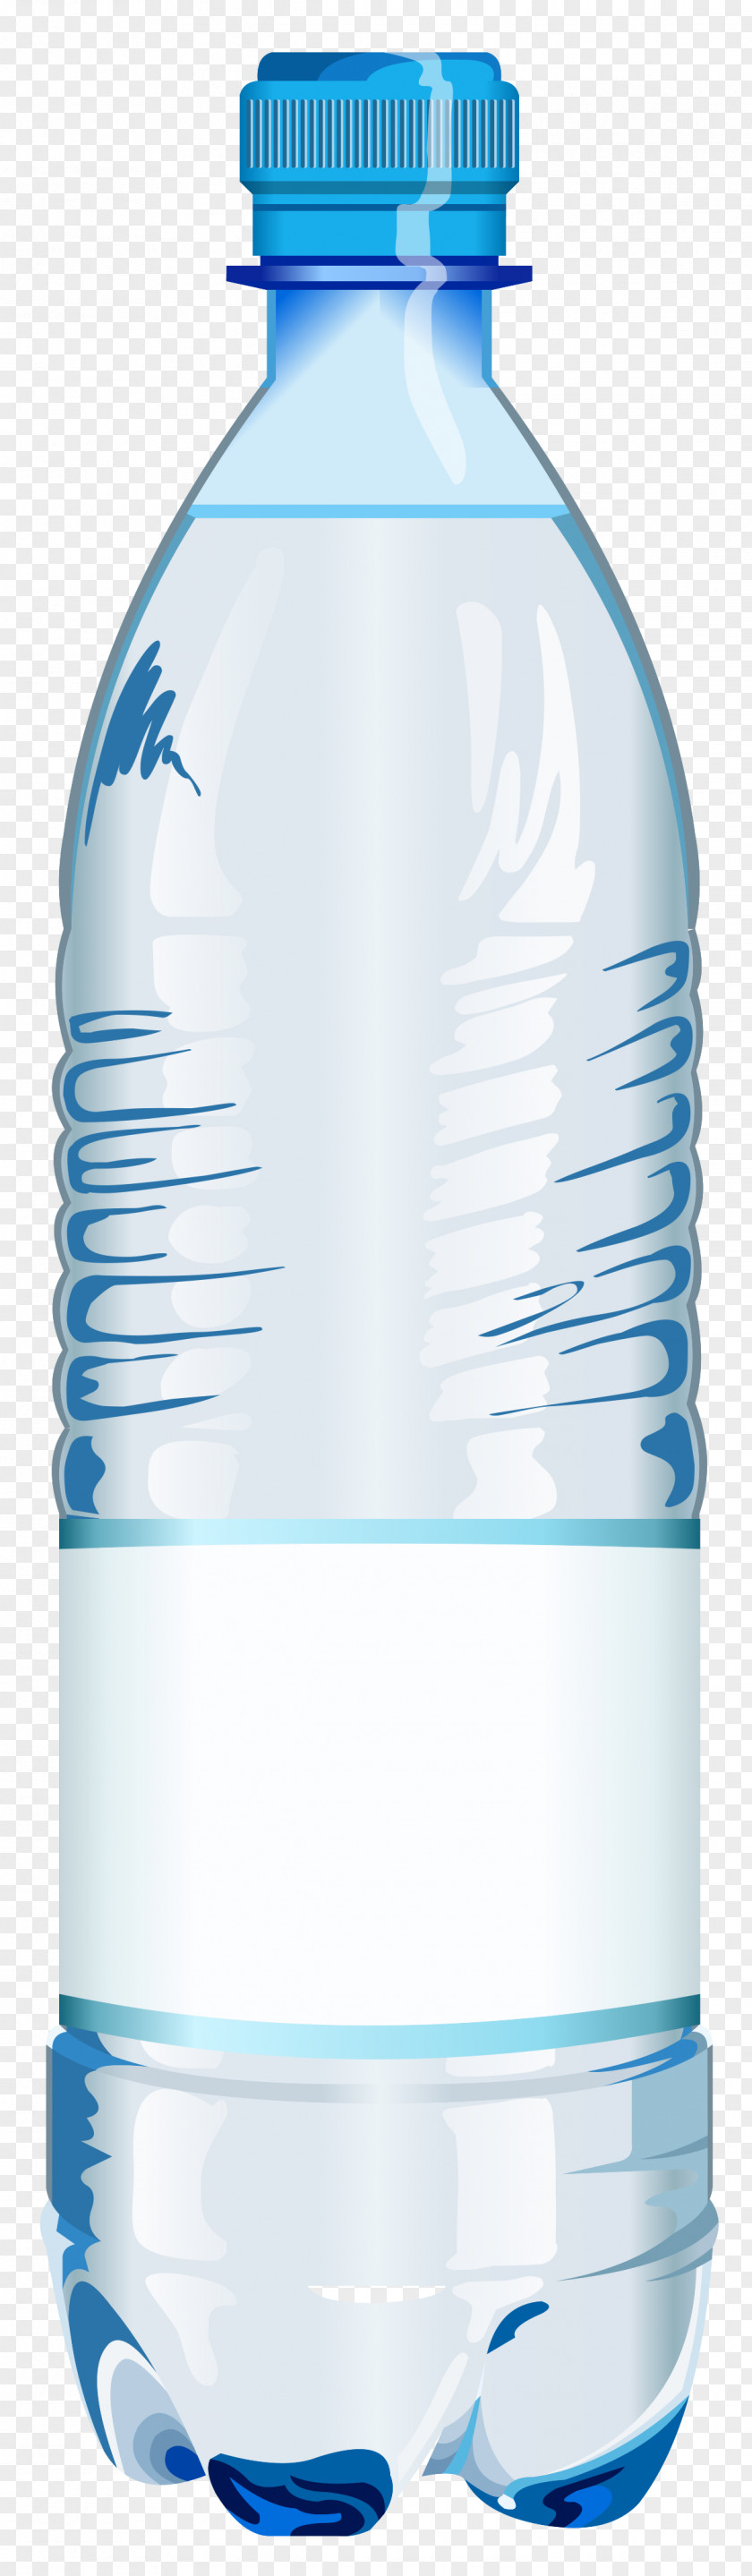 Water Bottle Fizzy Drinks Plastic Bottles Label PNG